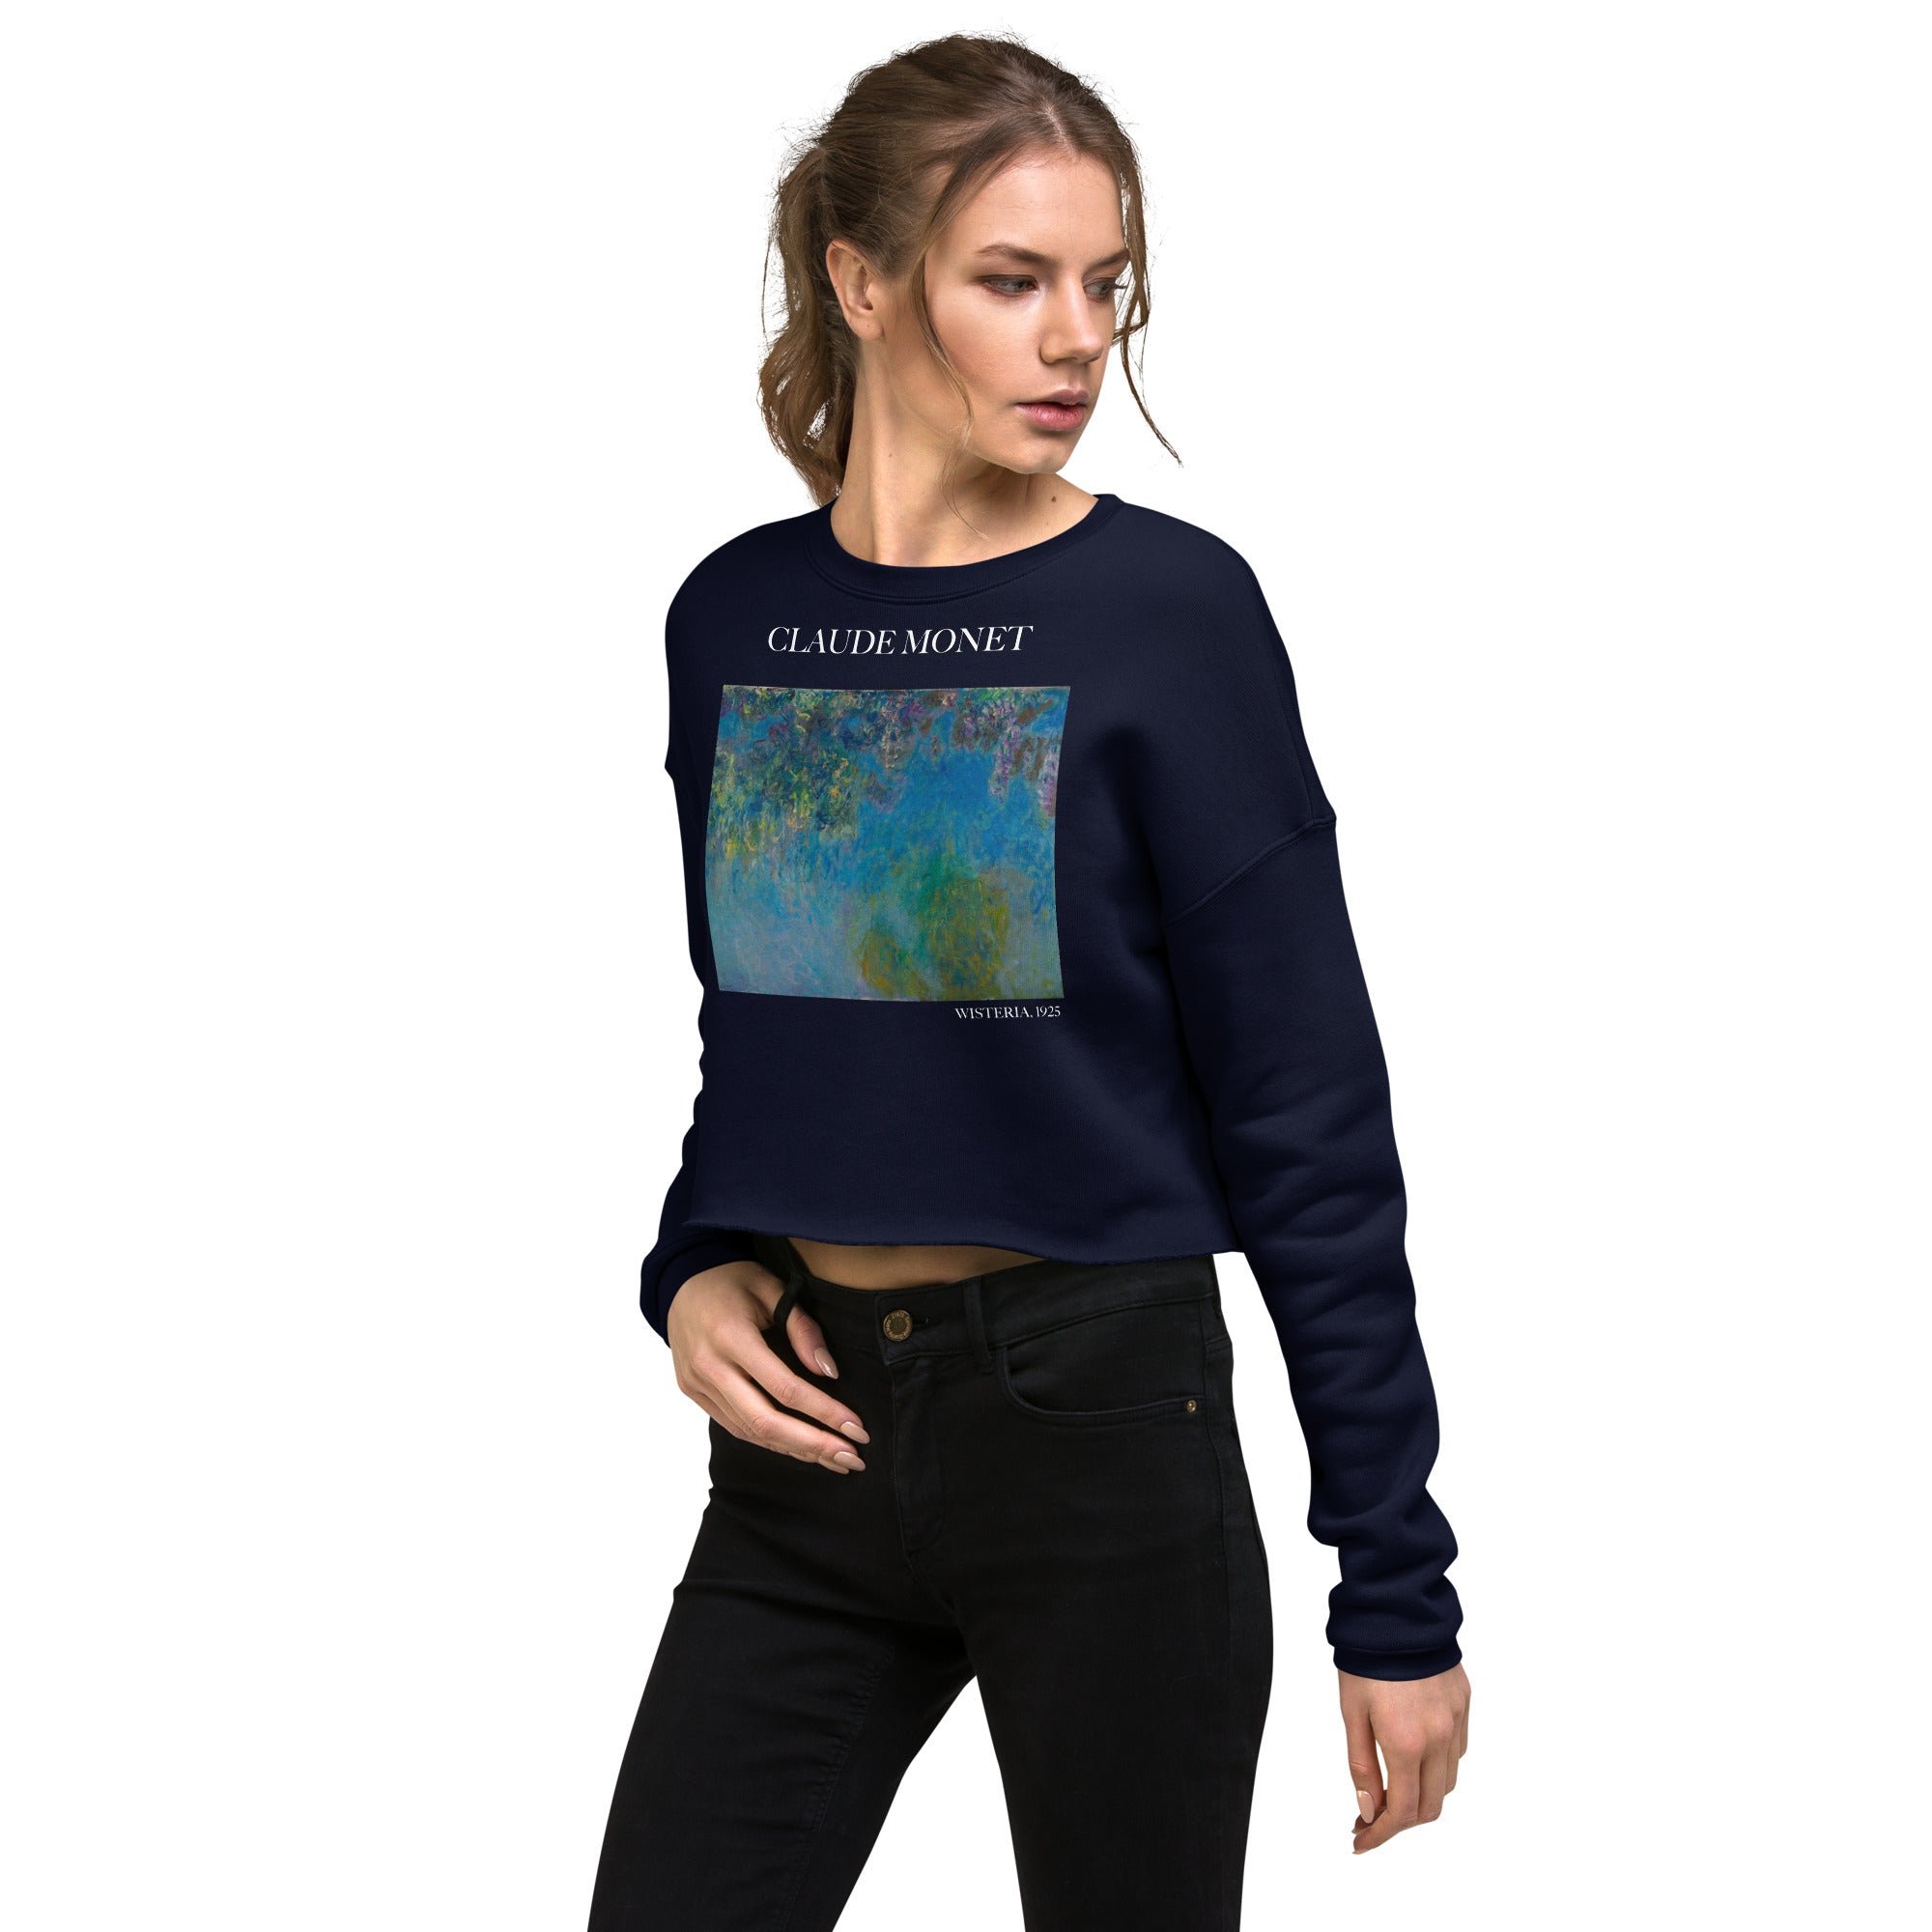 Claude Monet 'Wisteria' Berühmtes Gemälde Kurzes Sweatshirt | Premium Art Kurzes Sweatshirt